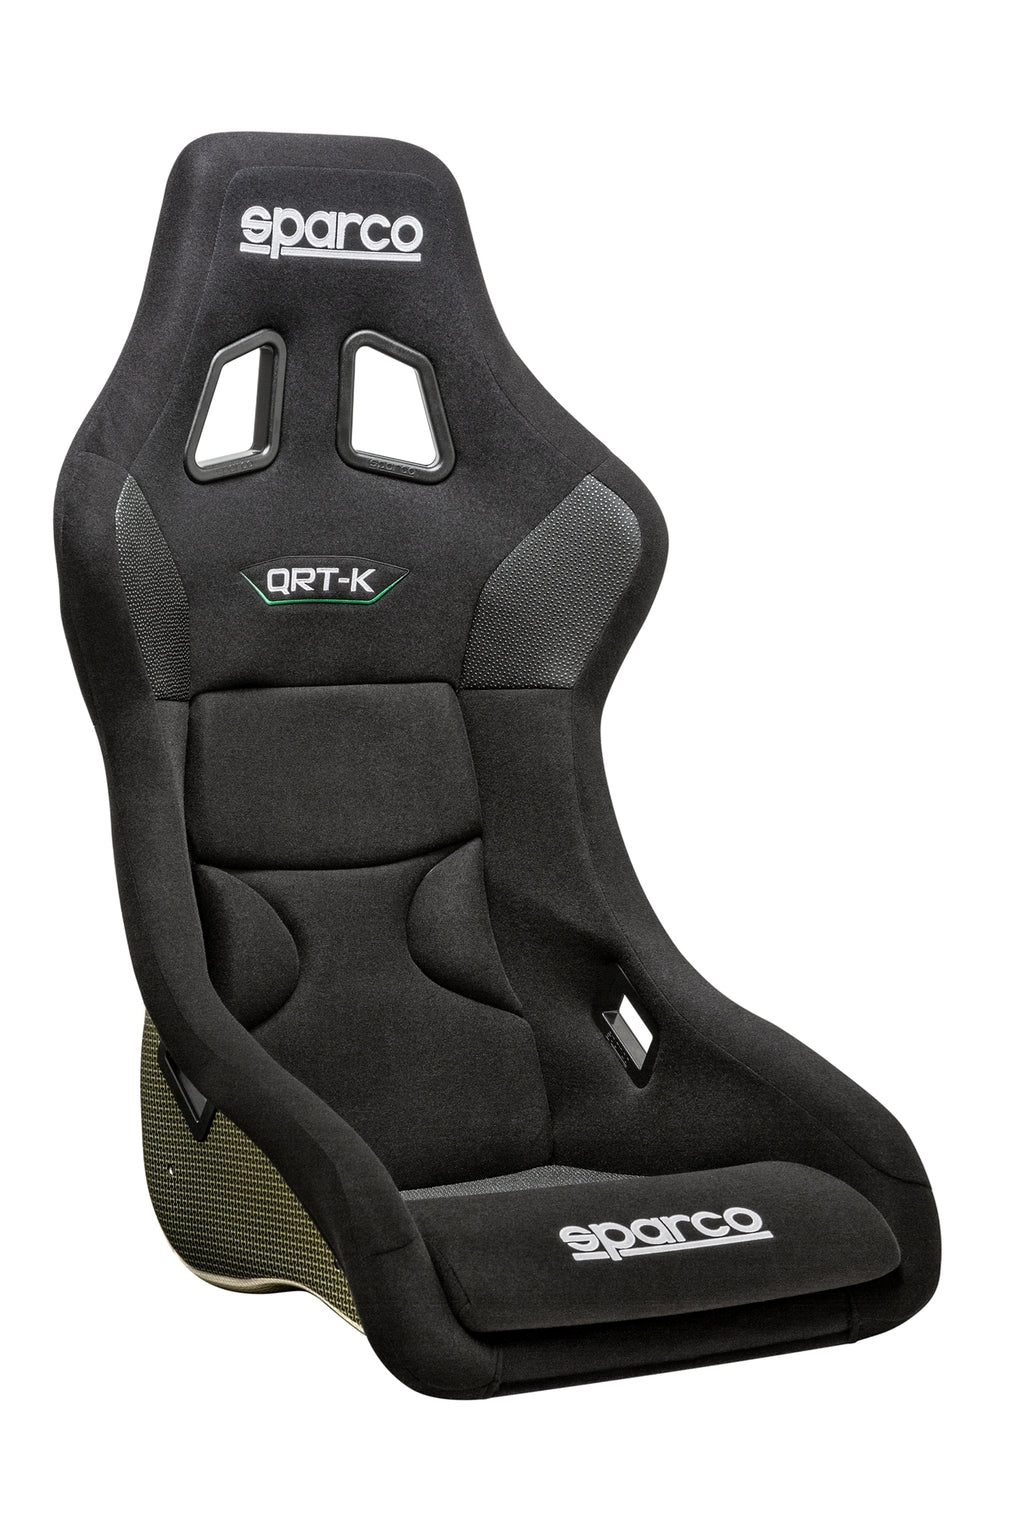 Sparco - QRT-K Kevlar Competition Seat